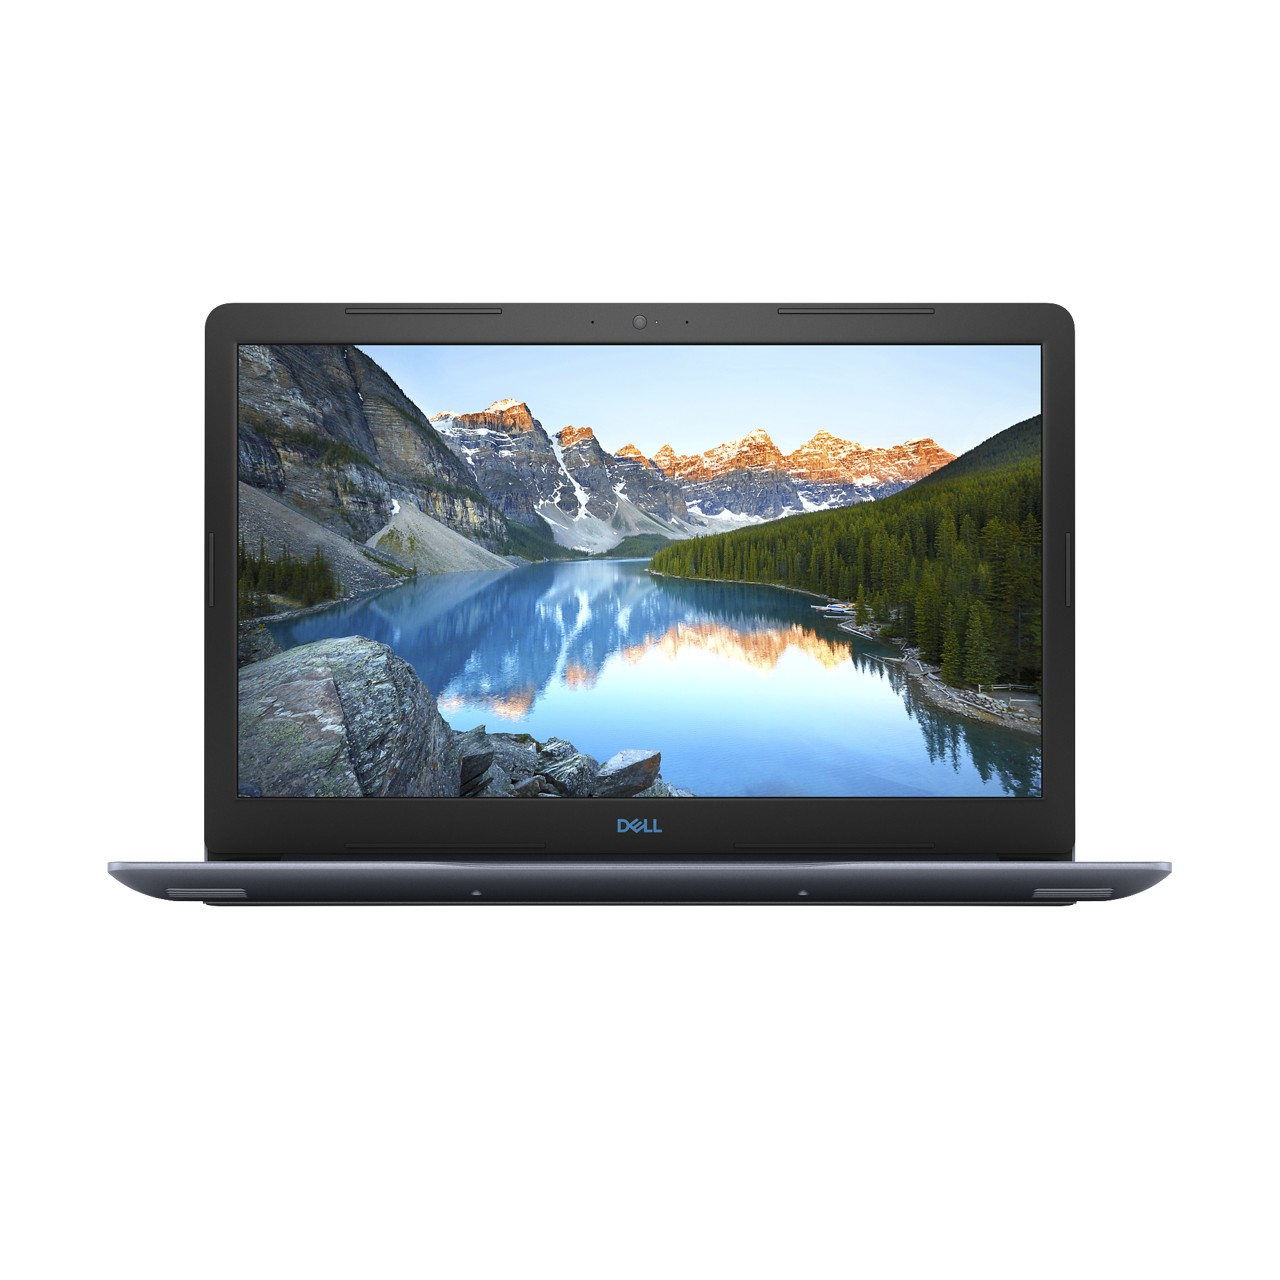 Laptop Gamer Dell Inspiron G3 17 Gtx1050 I7 8750 8Gb 1Tb+128Gb 17.3"